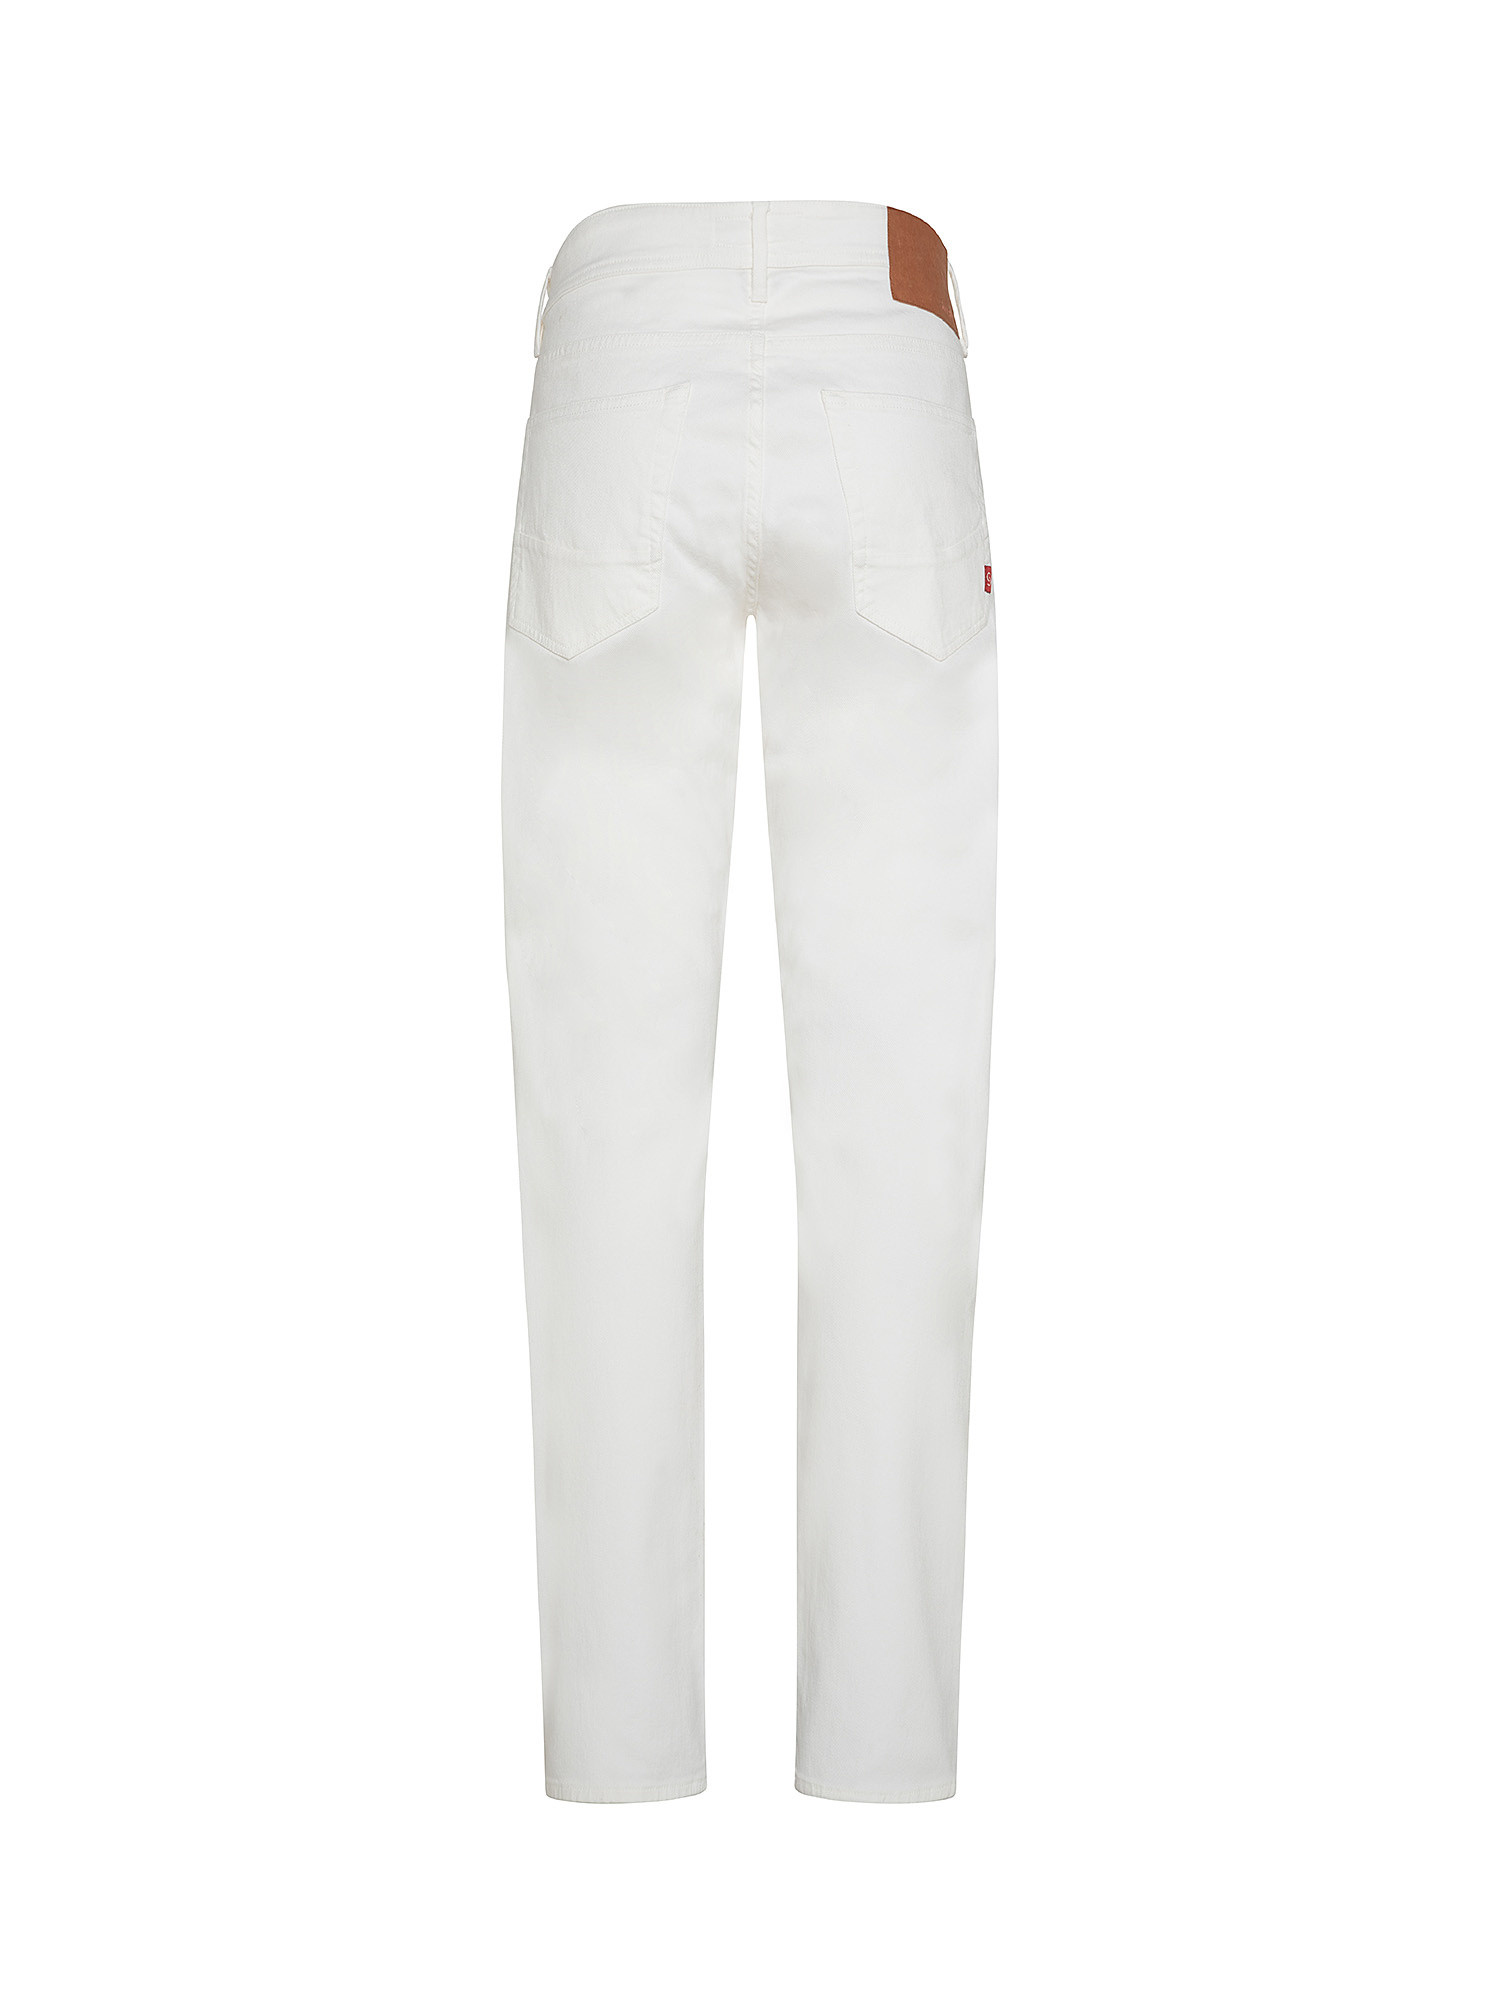 Pantalone denim, Bianco, large image number 1